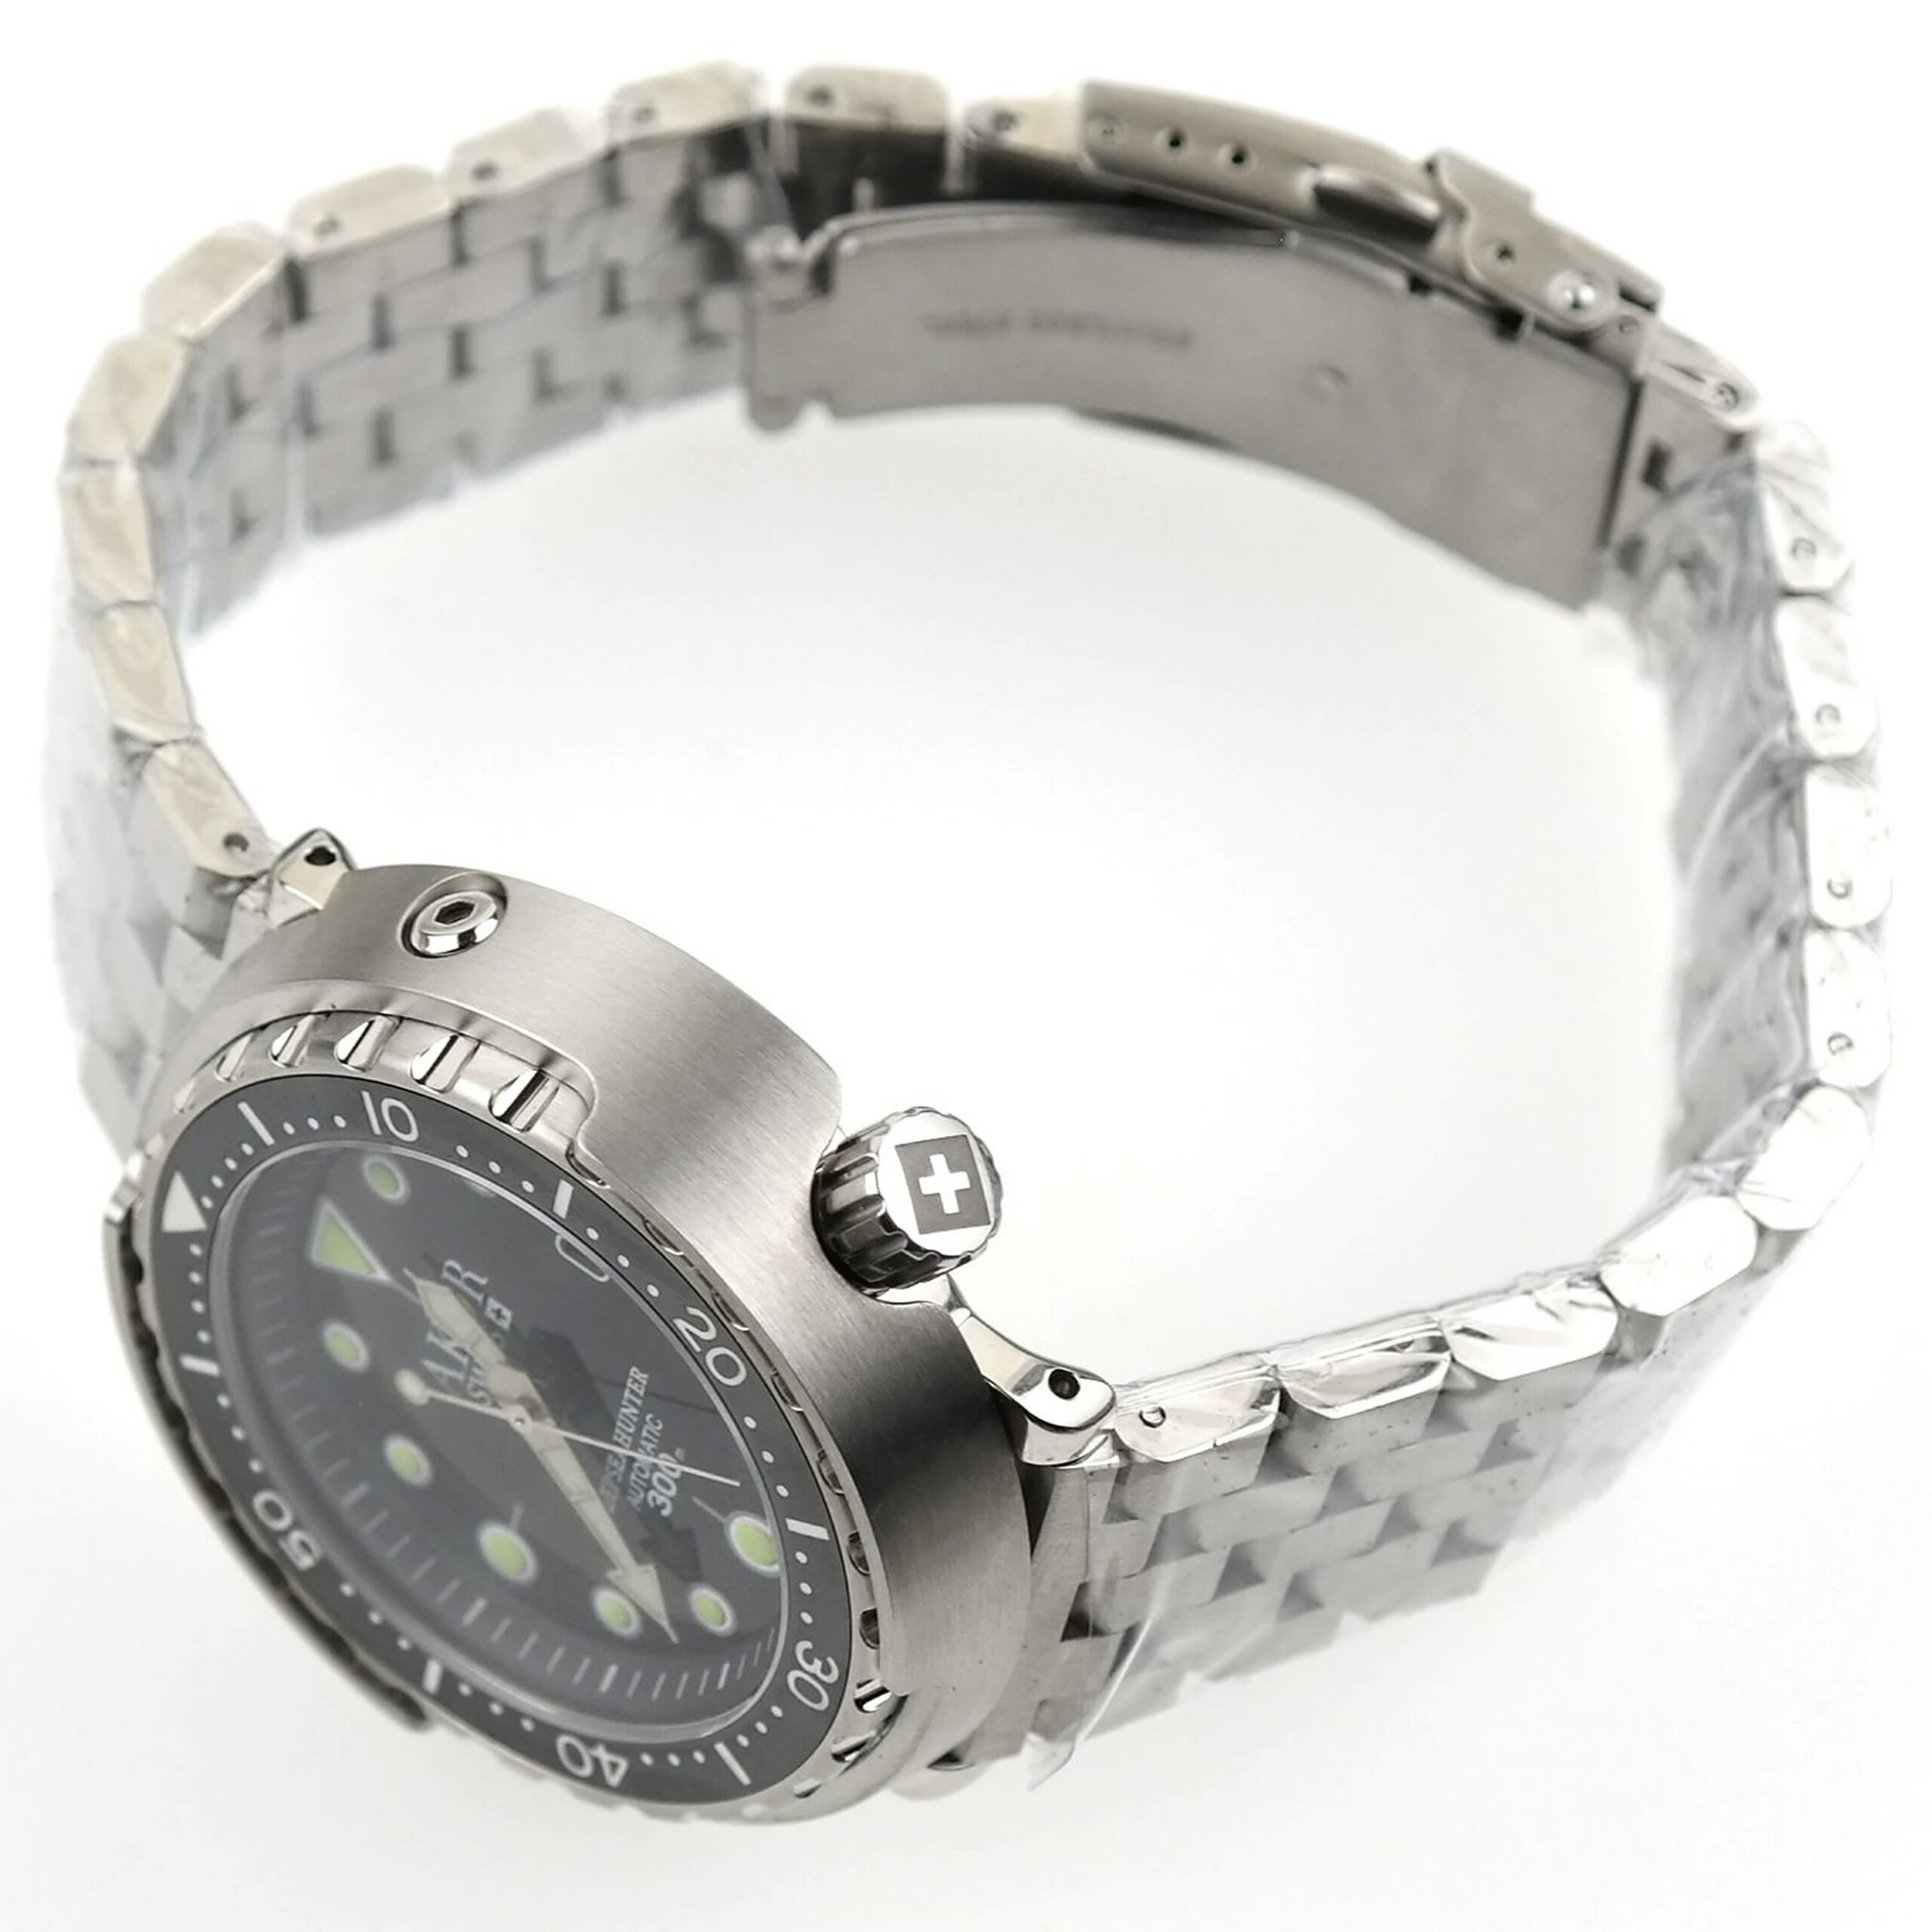 AKOR SWISS - DEEP SEA HUNTER Automatic Watch - Diving 300 M - Black